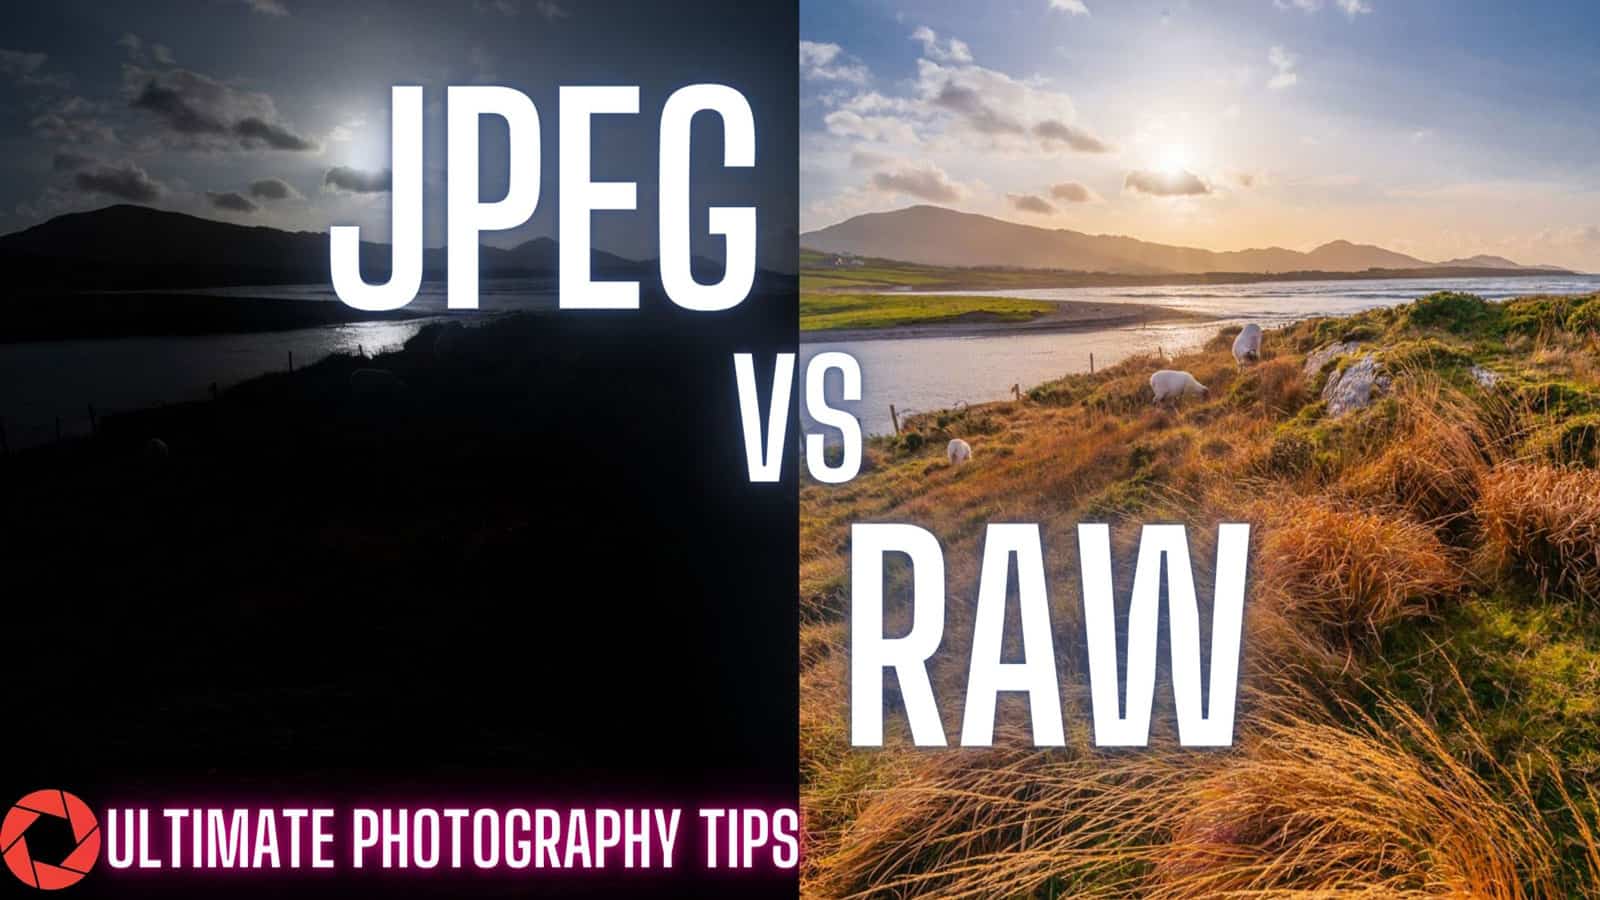 JPEG vs RAW example photograph